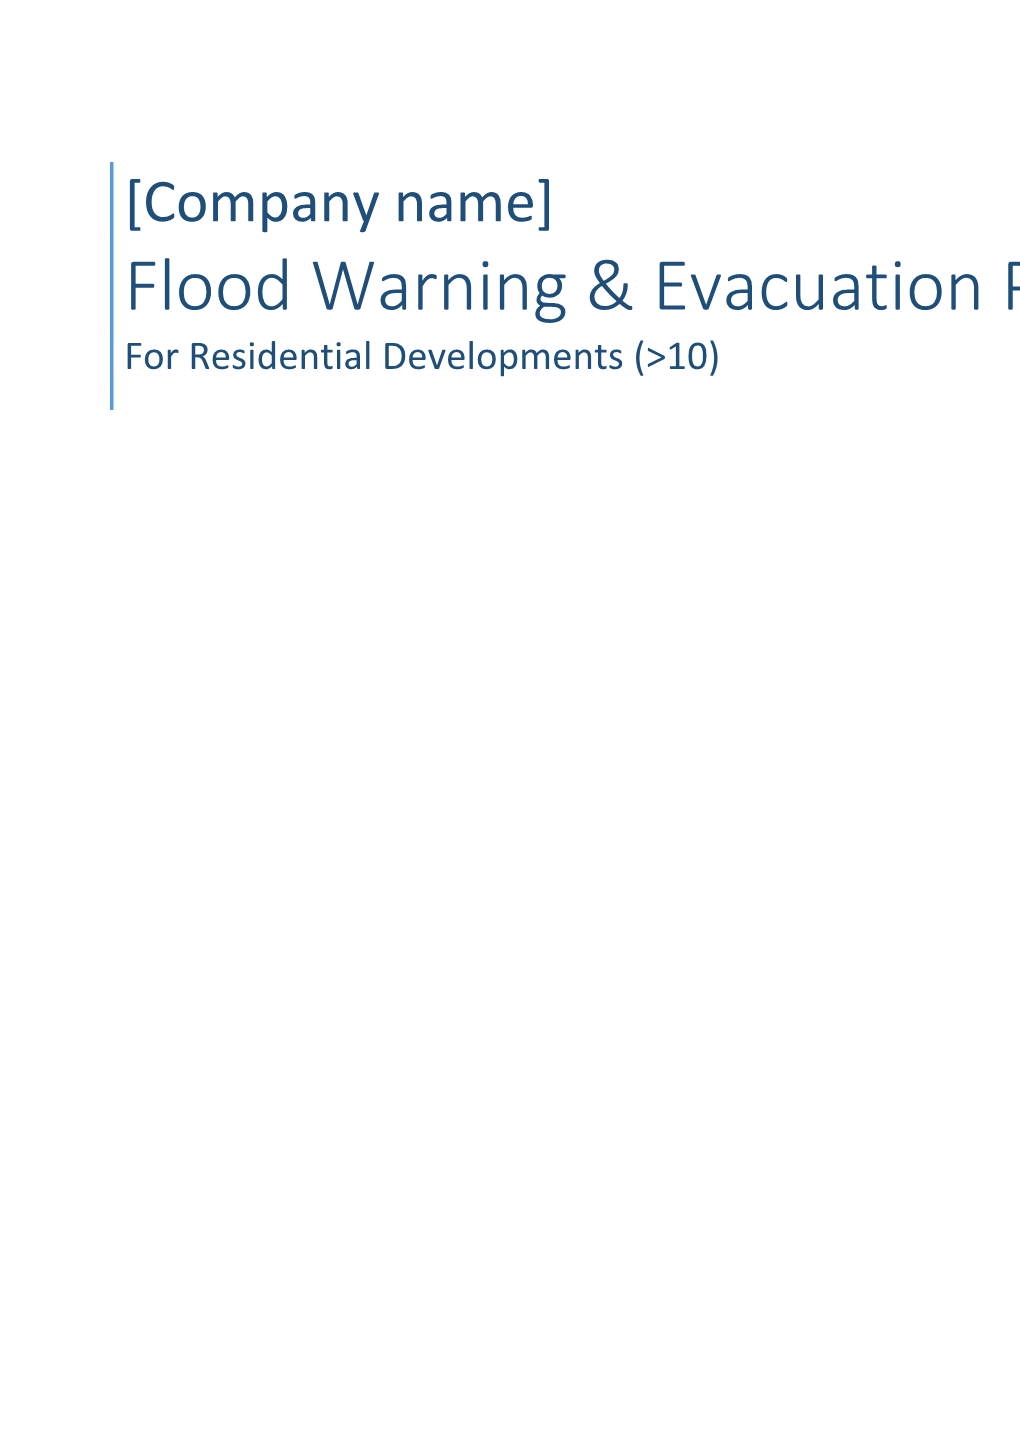 Flood Warning & Evacuation Plan